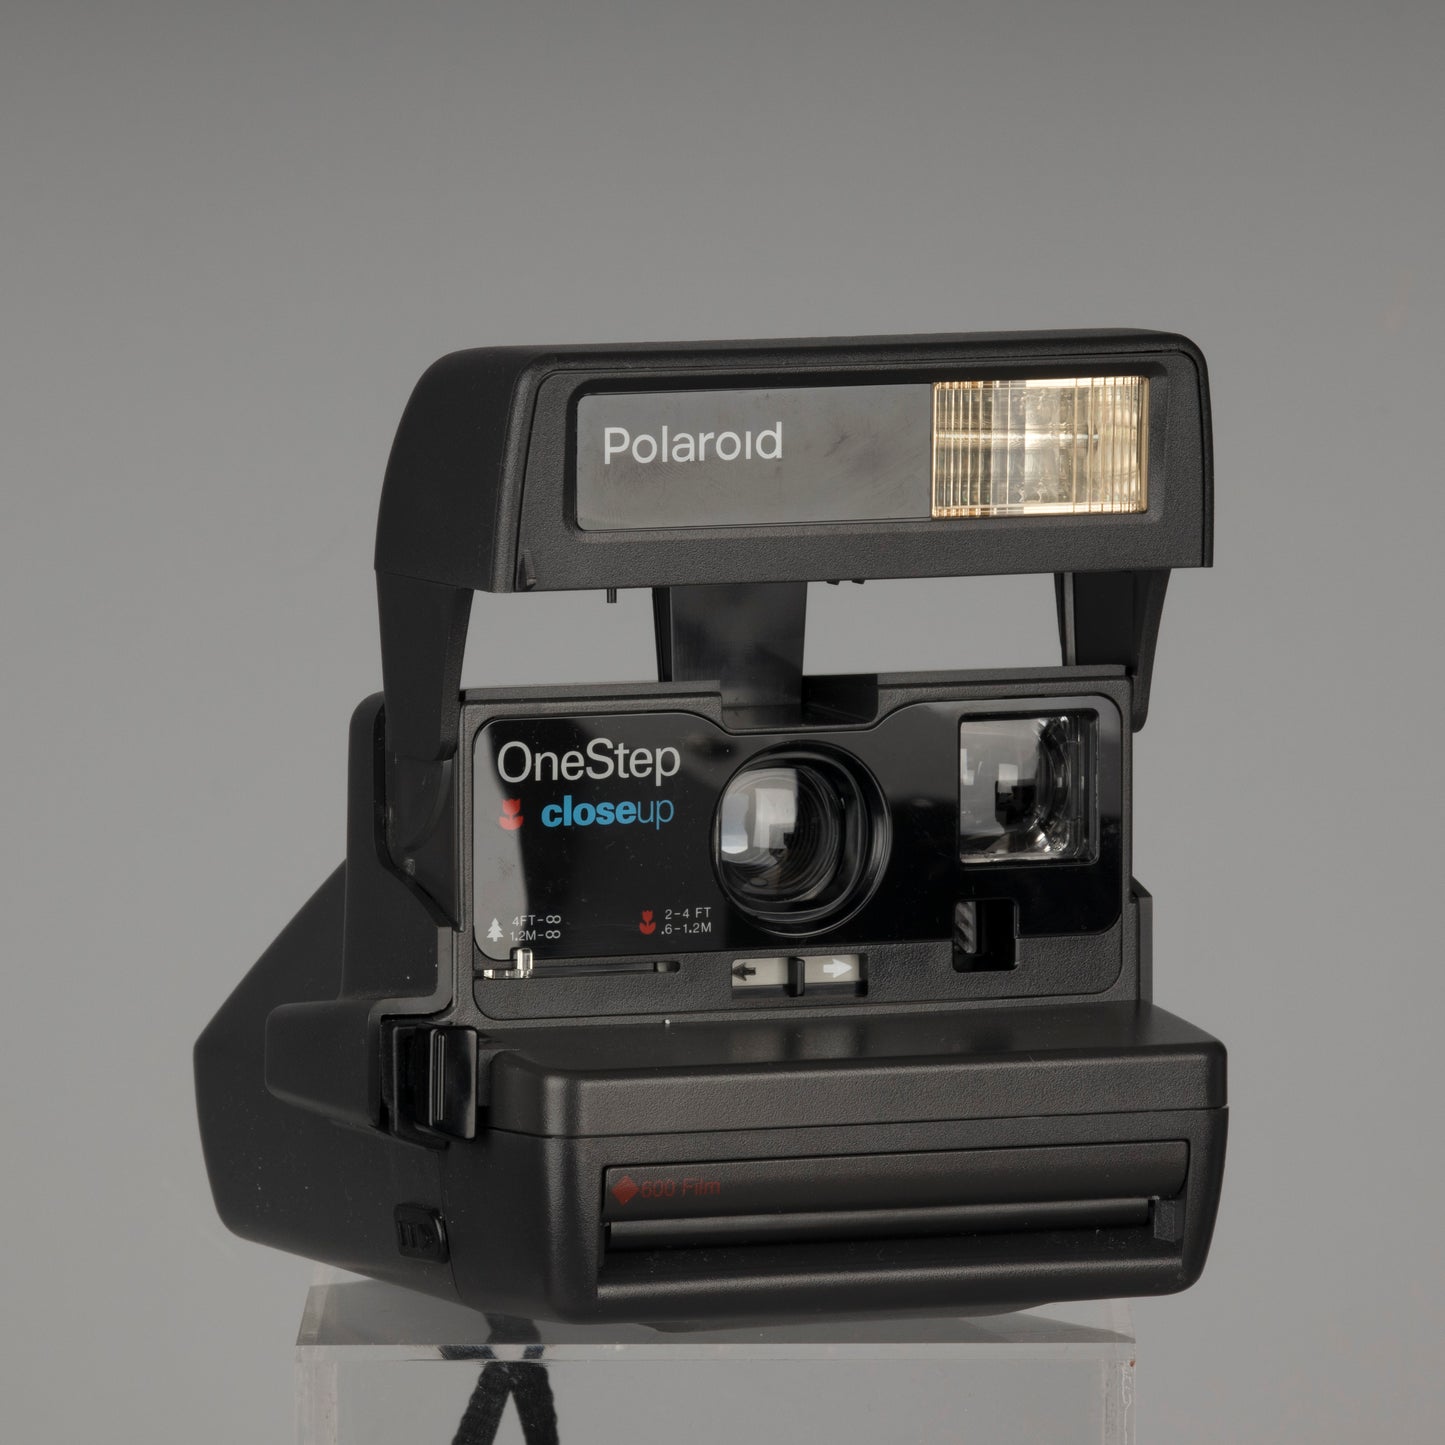 Polaroid One Step Close-up instant camera